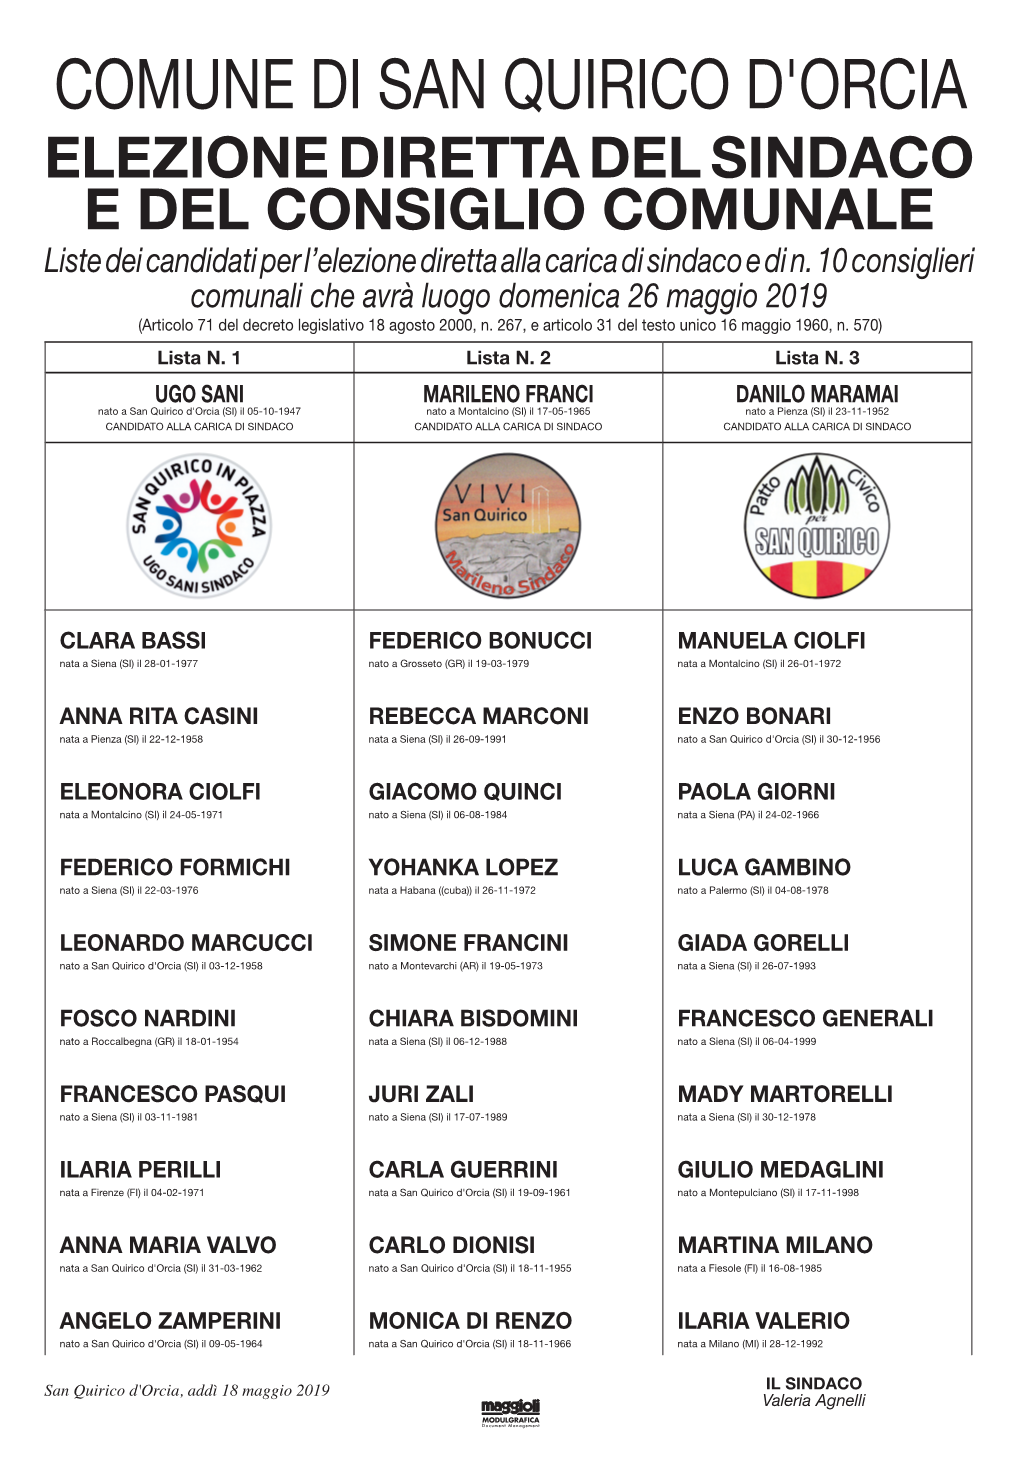 Liste Dei Candidati Per L'elezione Diretta Alla Carica Di Sindaco E Di N